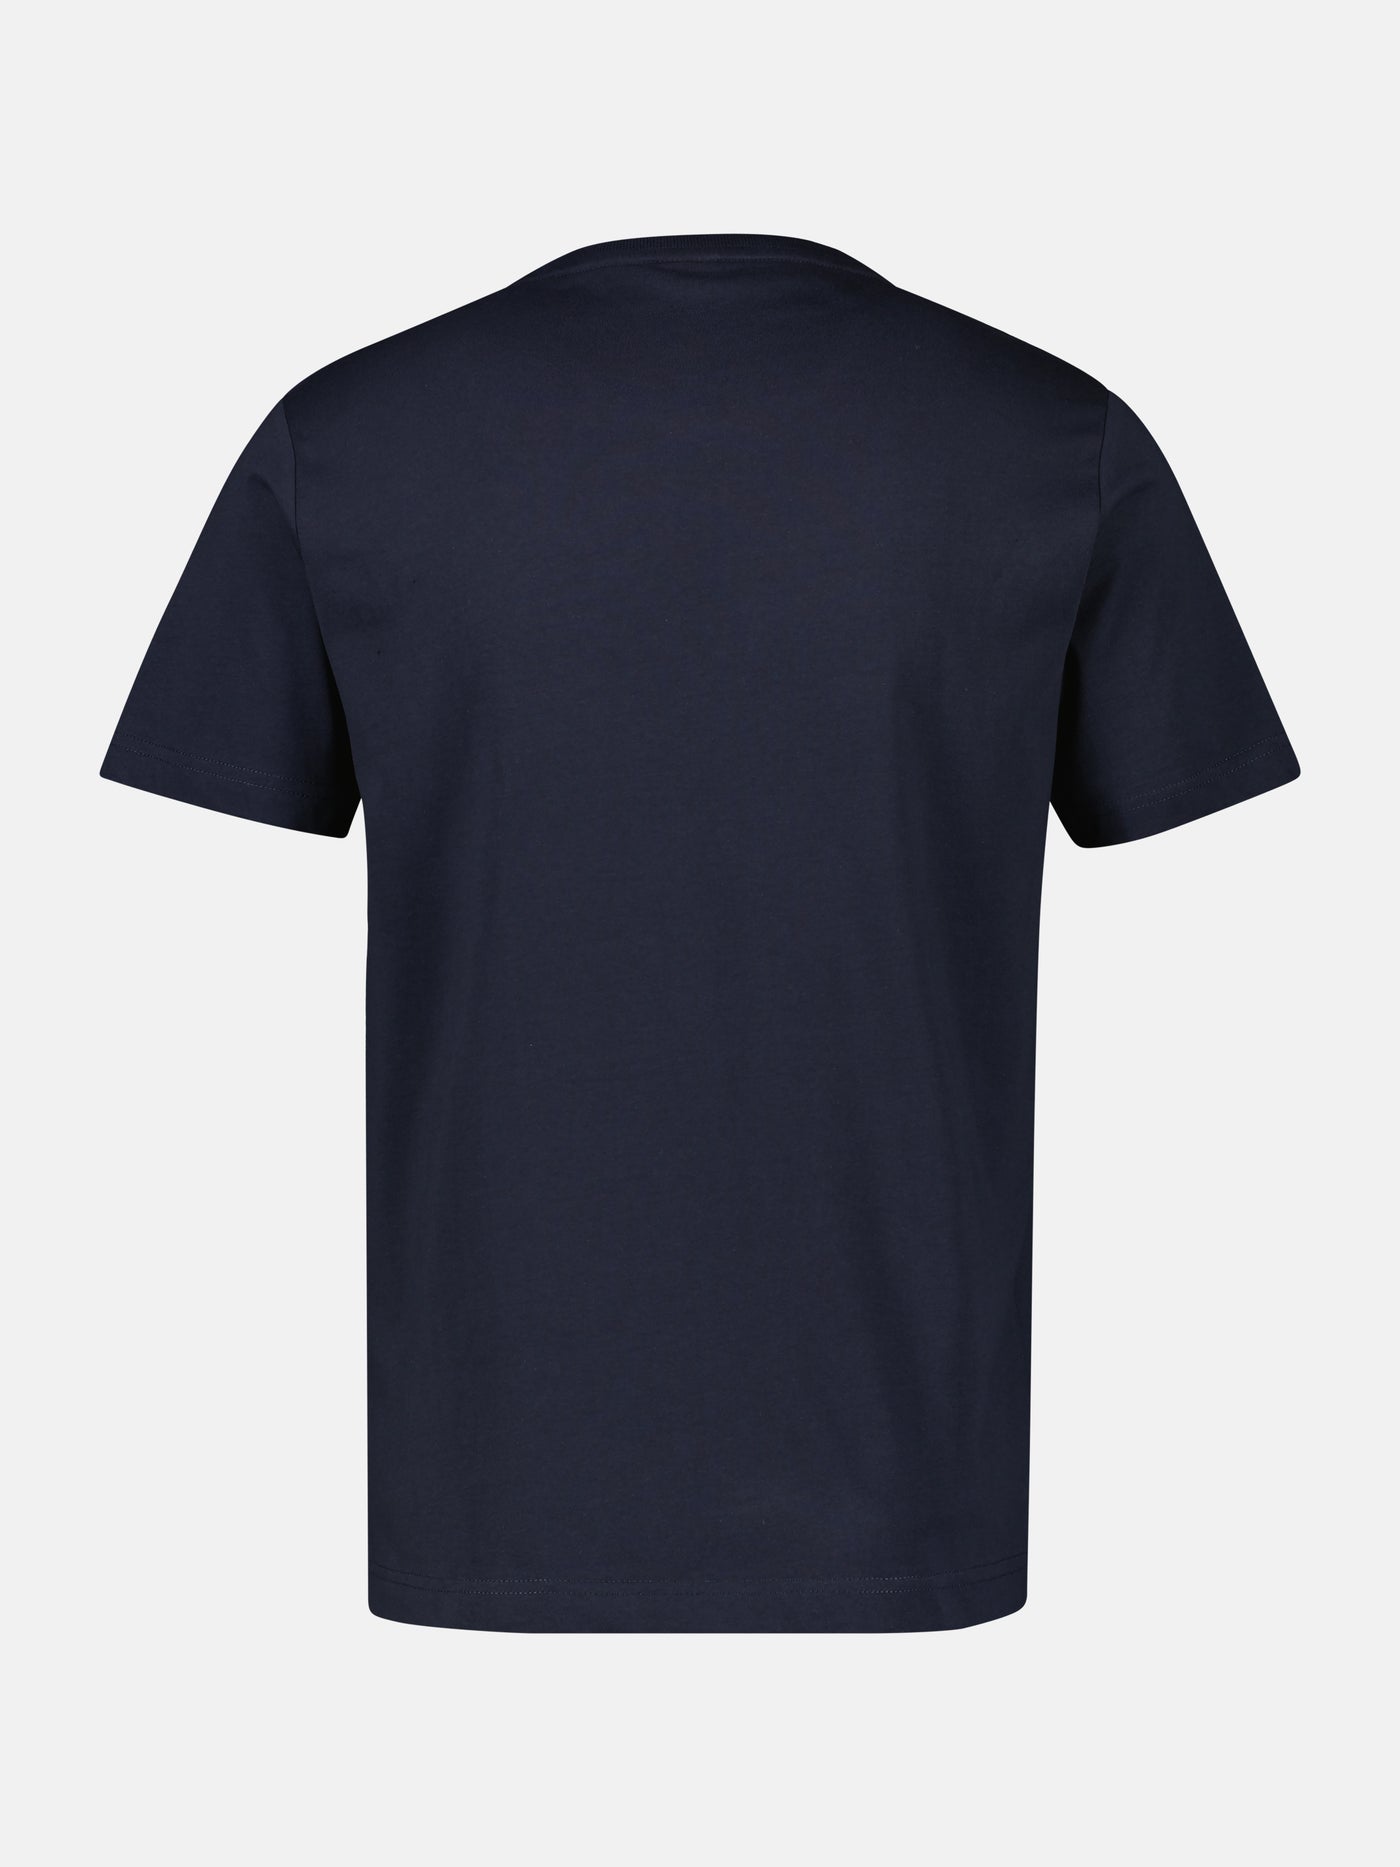 Herren T-Shirt mit Brust-Print